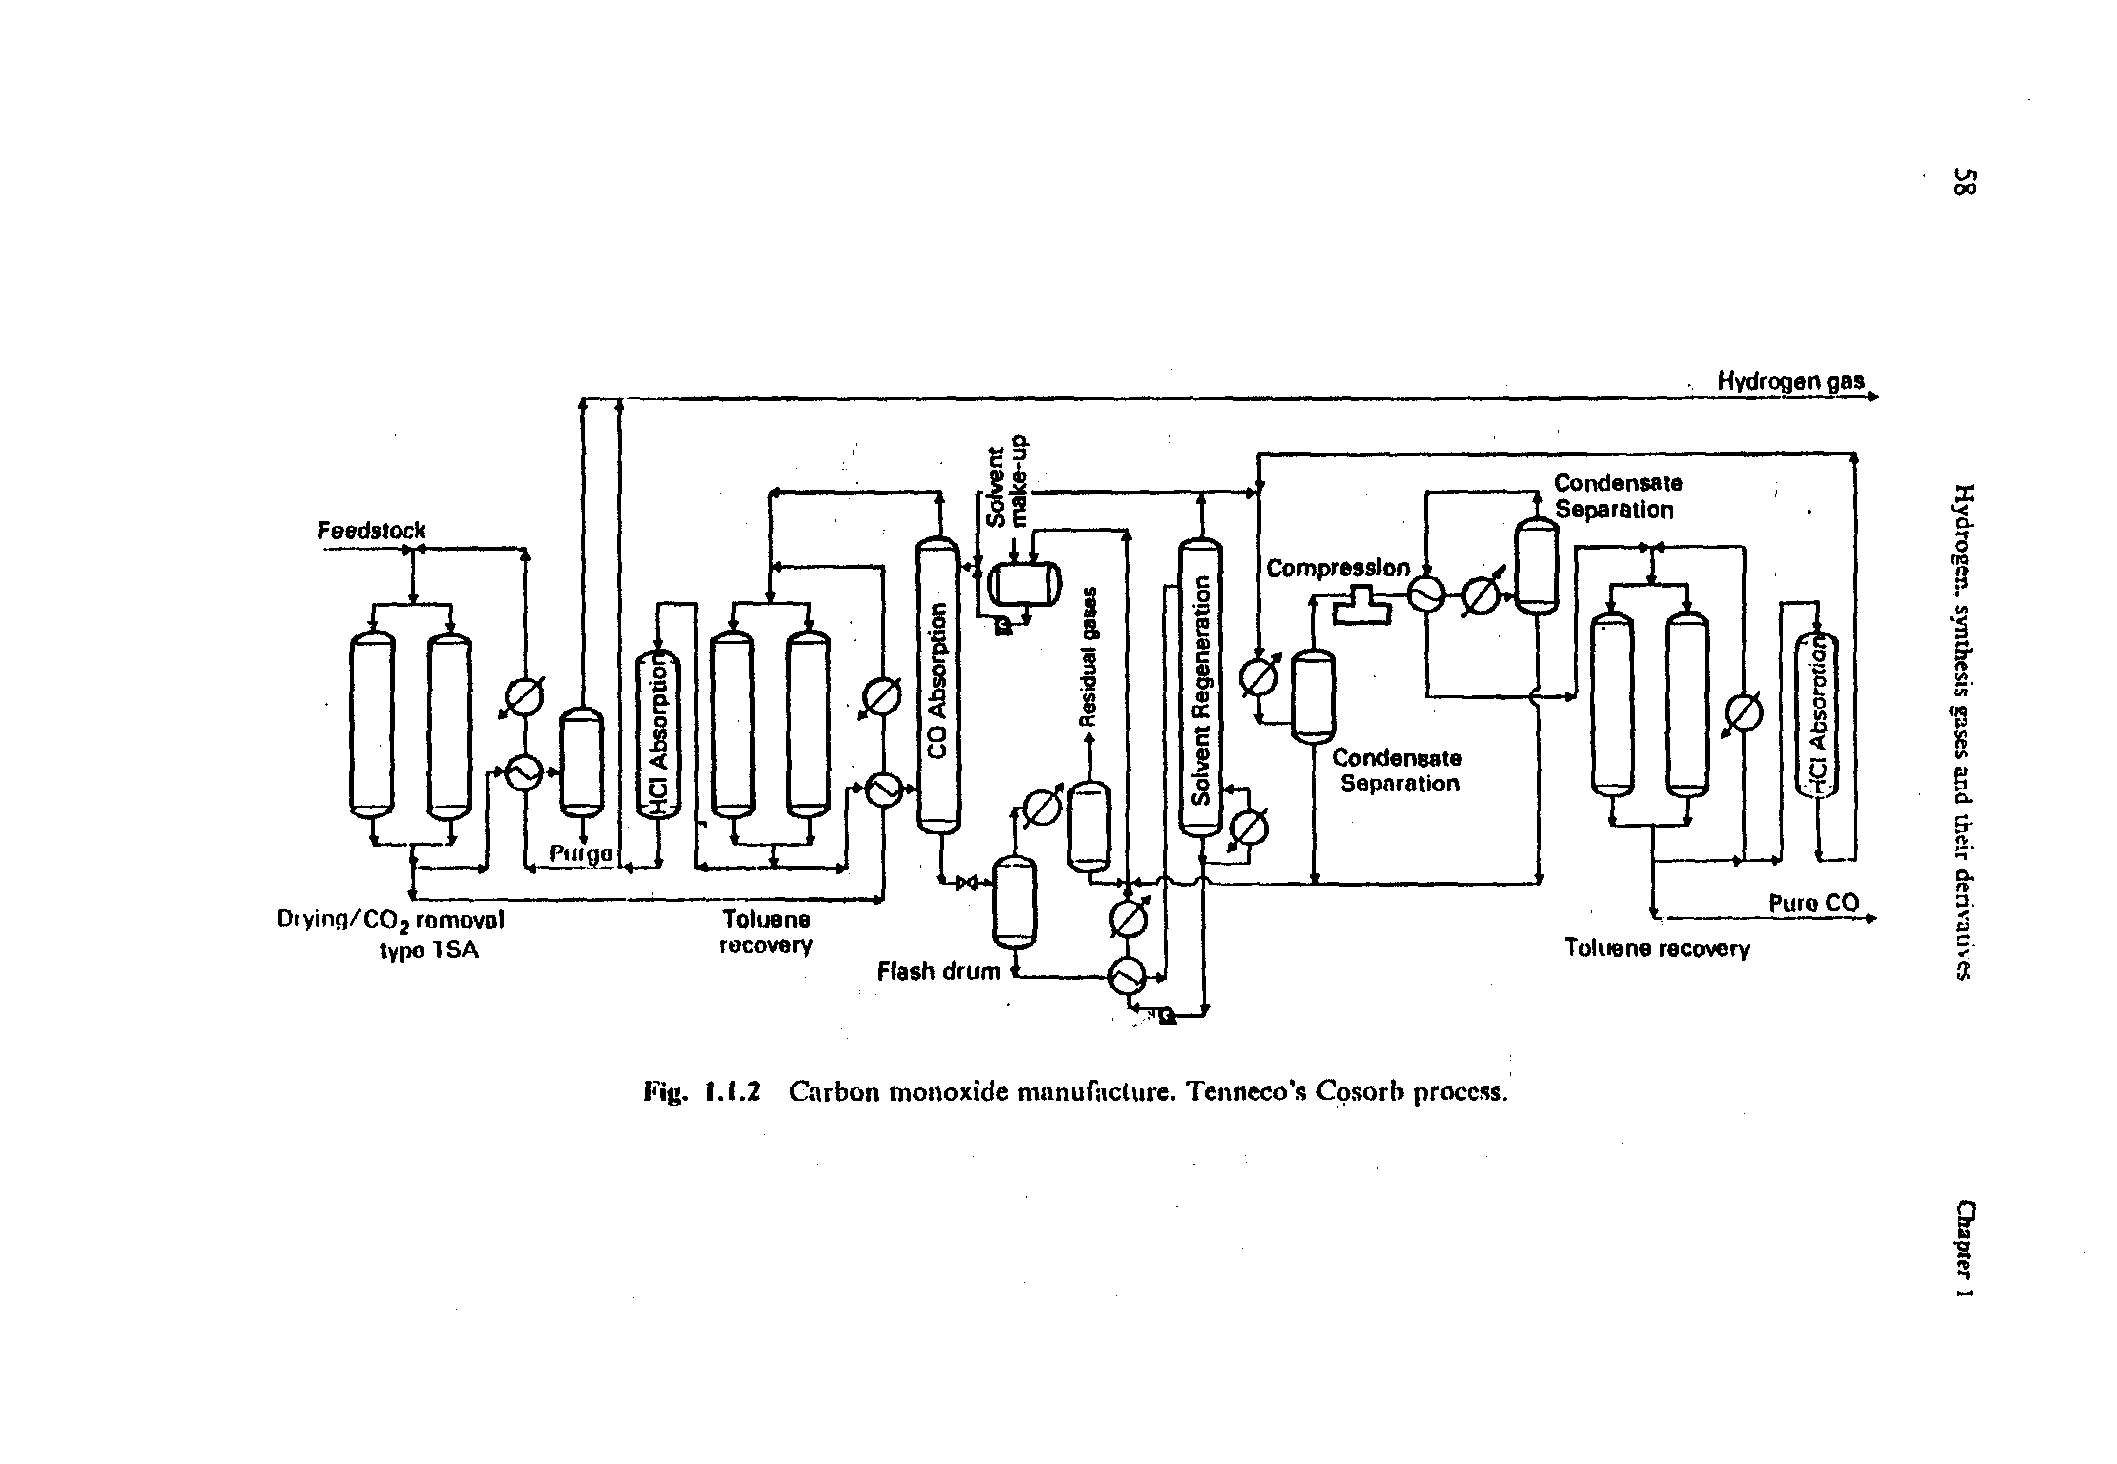 Fig. 1.1.2 Carbon monoxide manufaclure. Tenneco s Cosorb process.